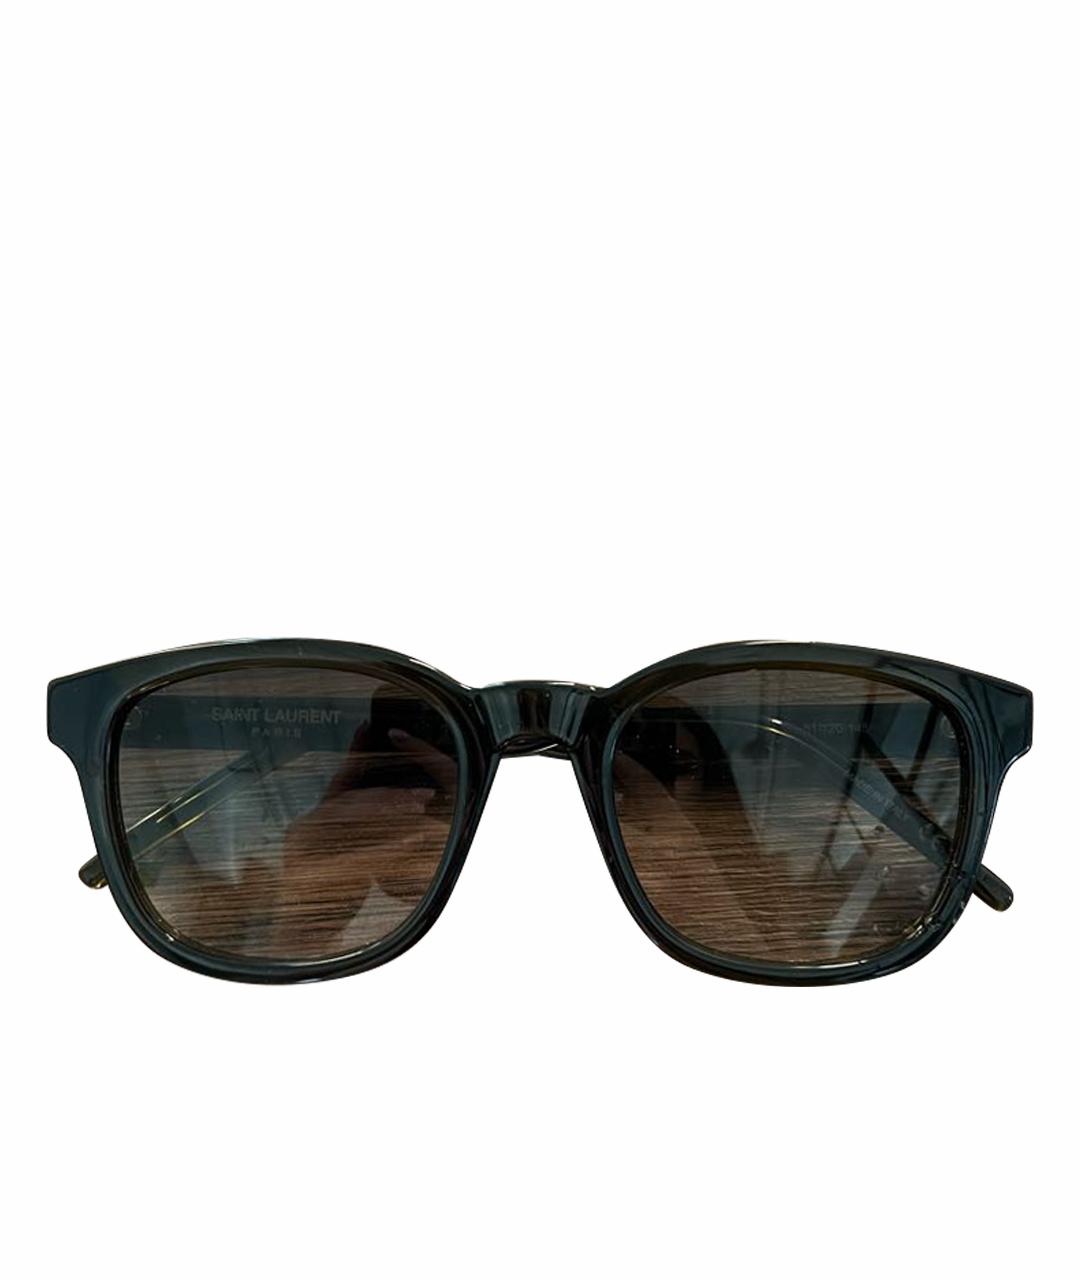 SAINT LAURENT Хаки пластиковые солнцезащитные очки, фото 1